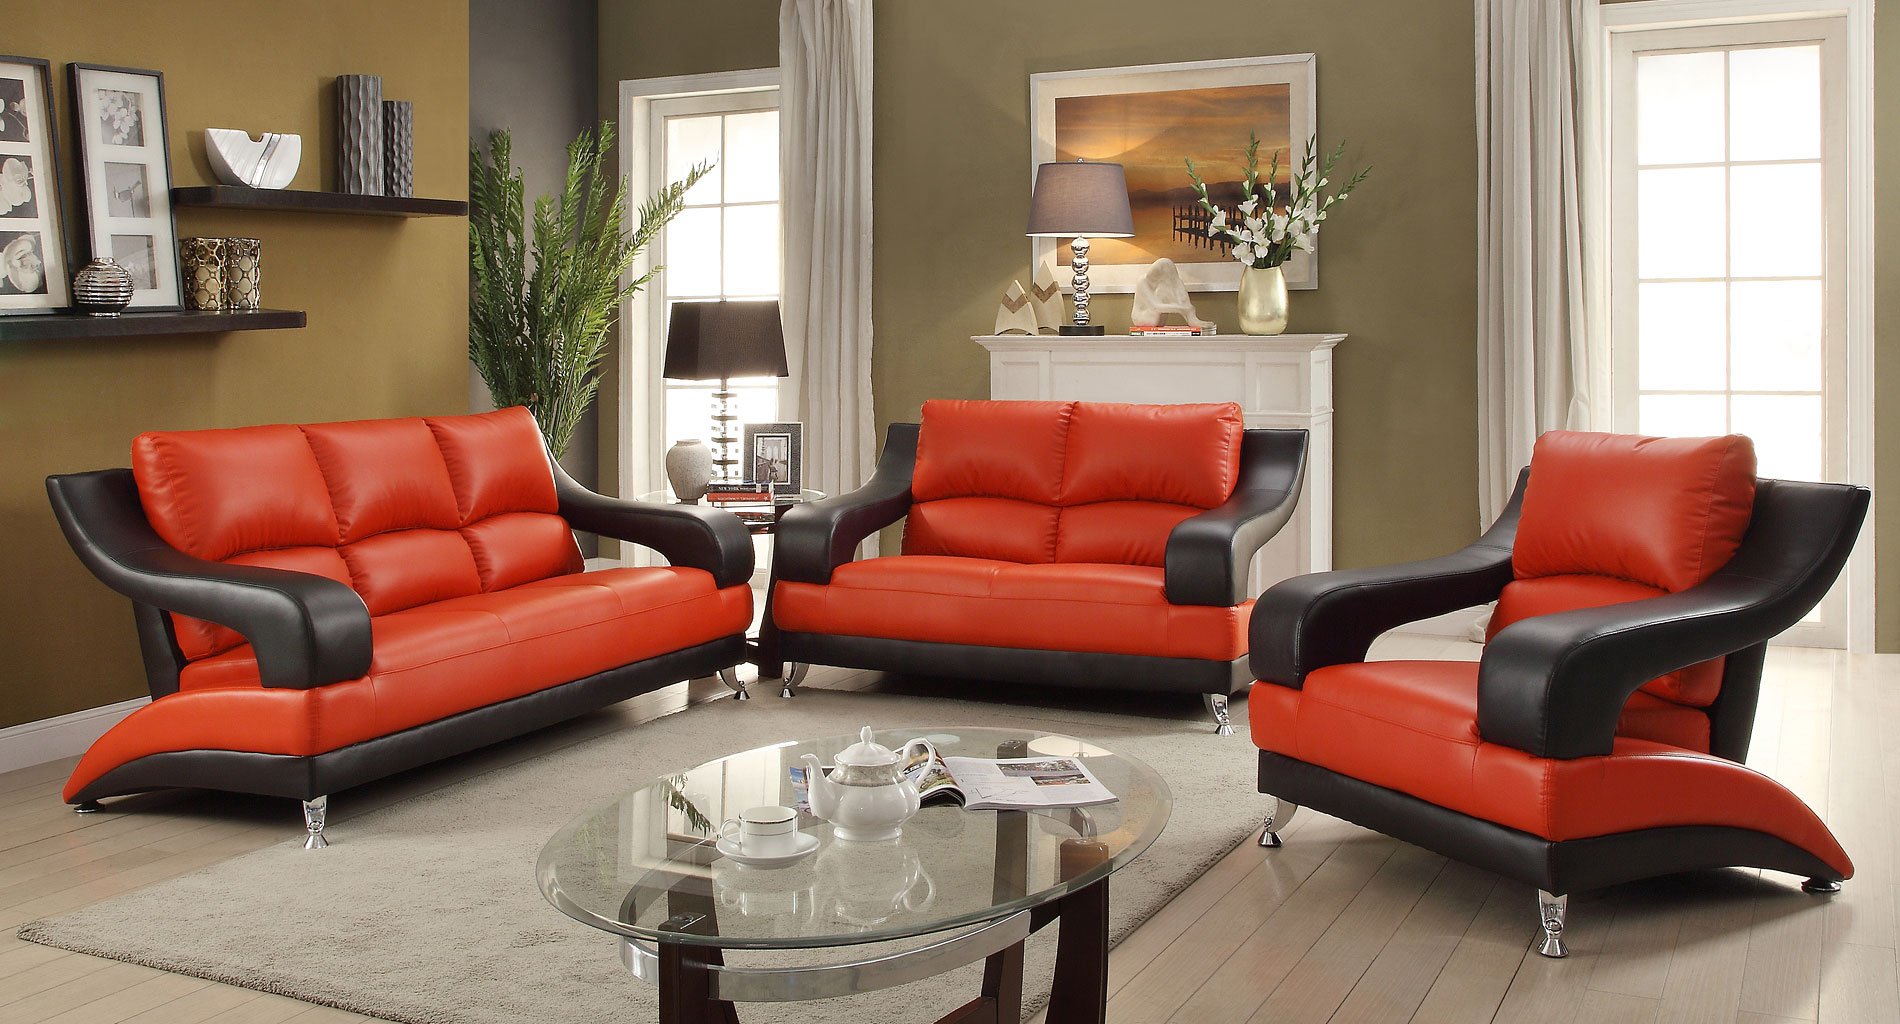 G249 Modern Living Room Set Red And Black By Glory Furniture FurniturePick